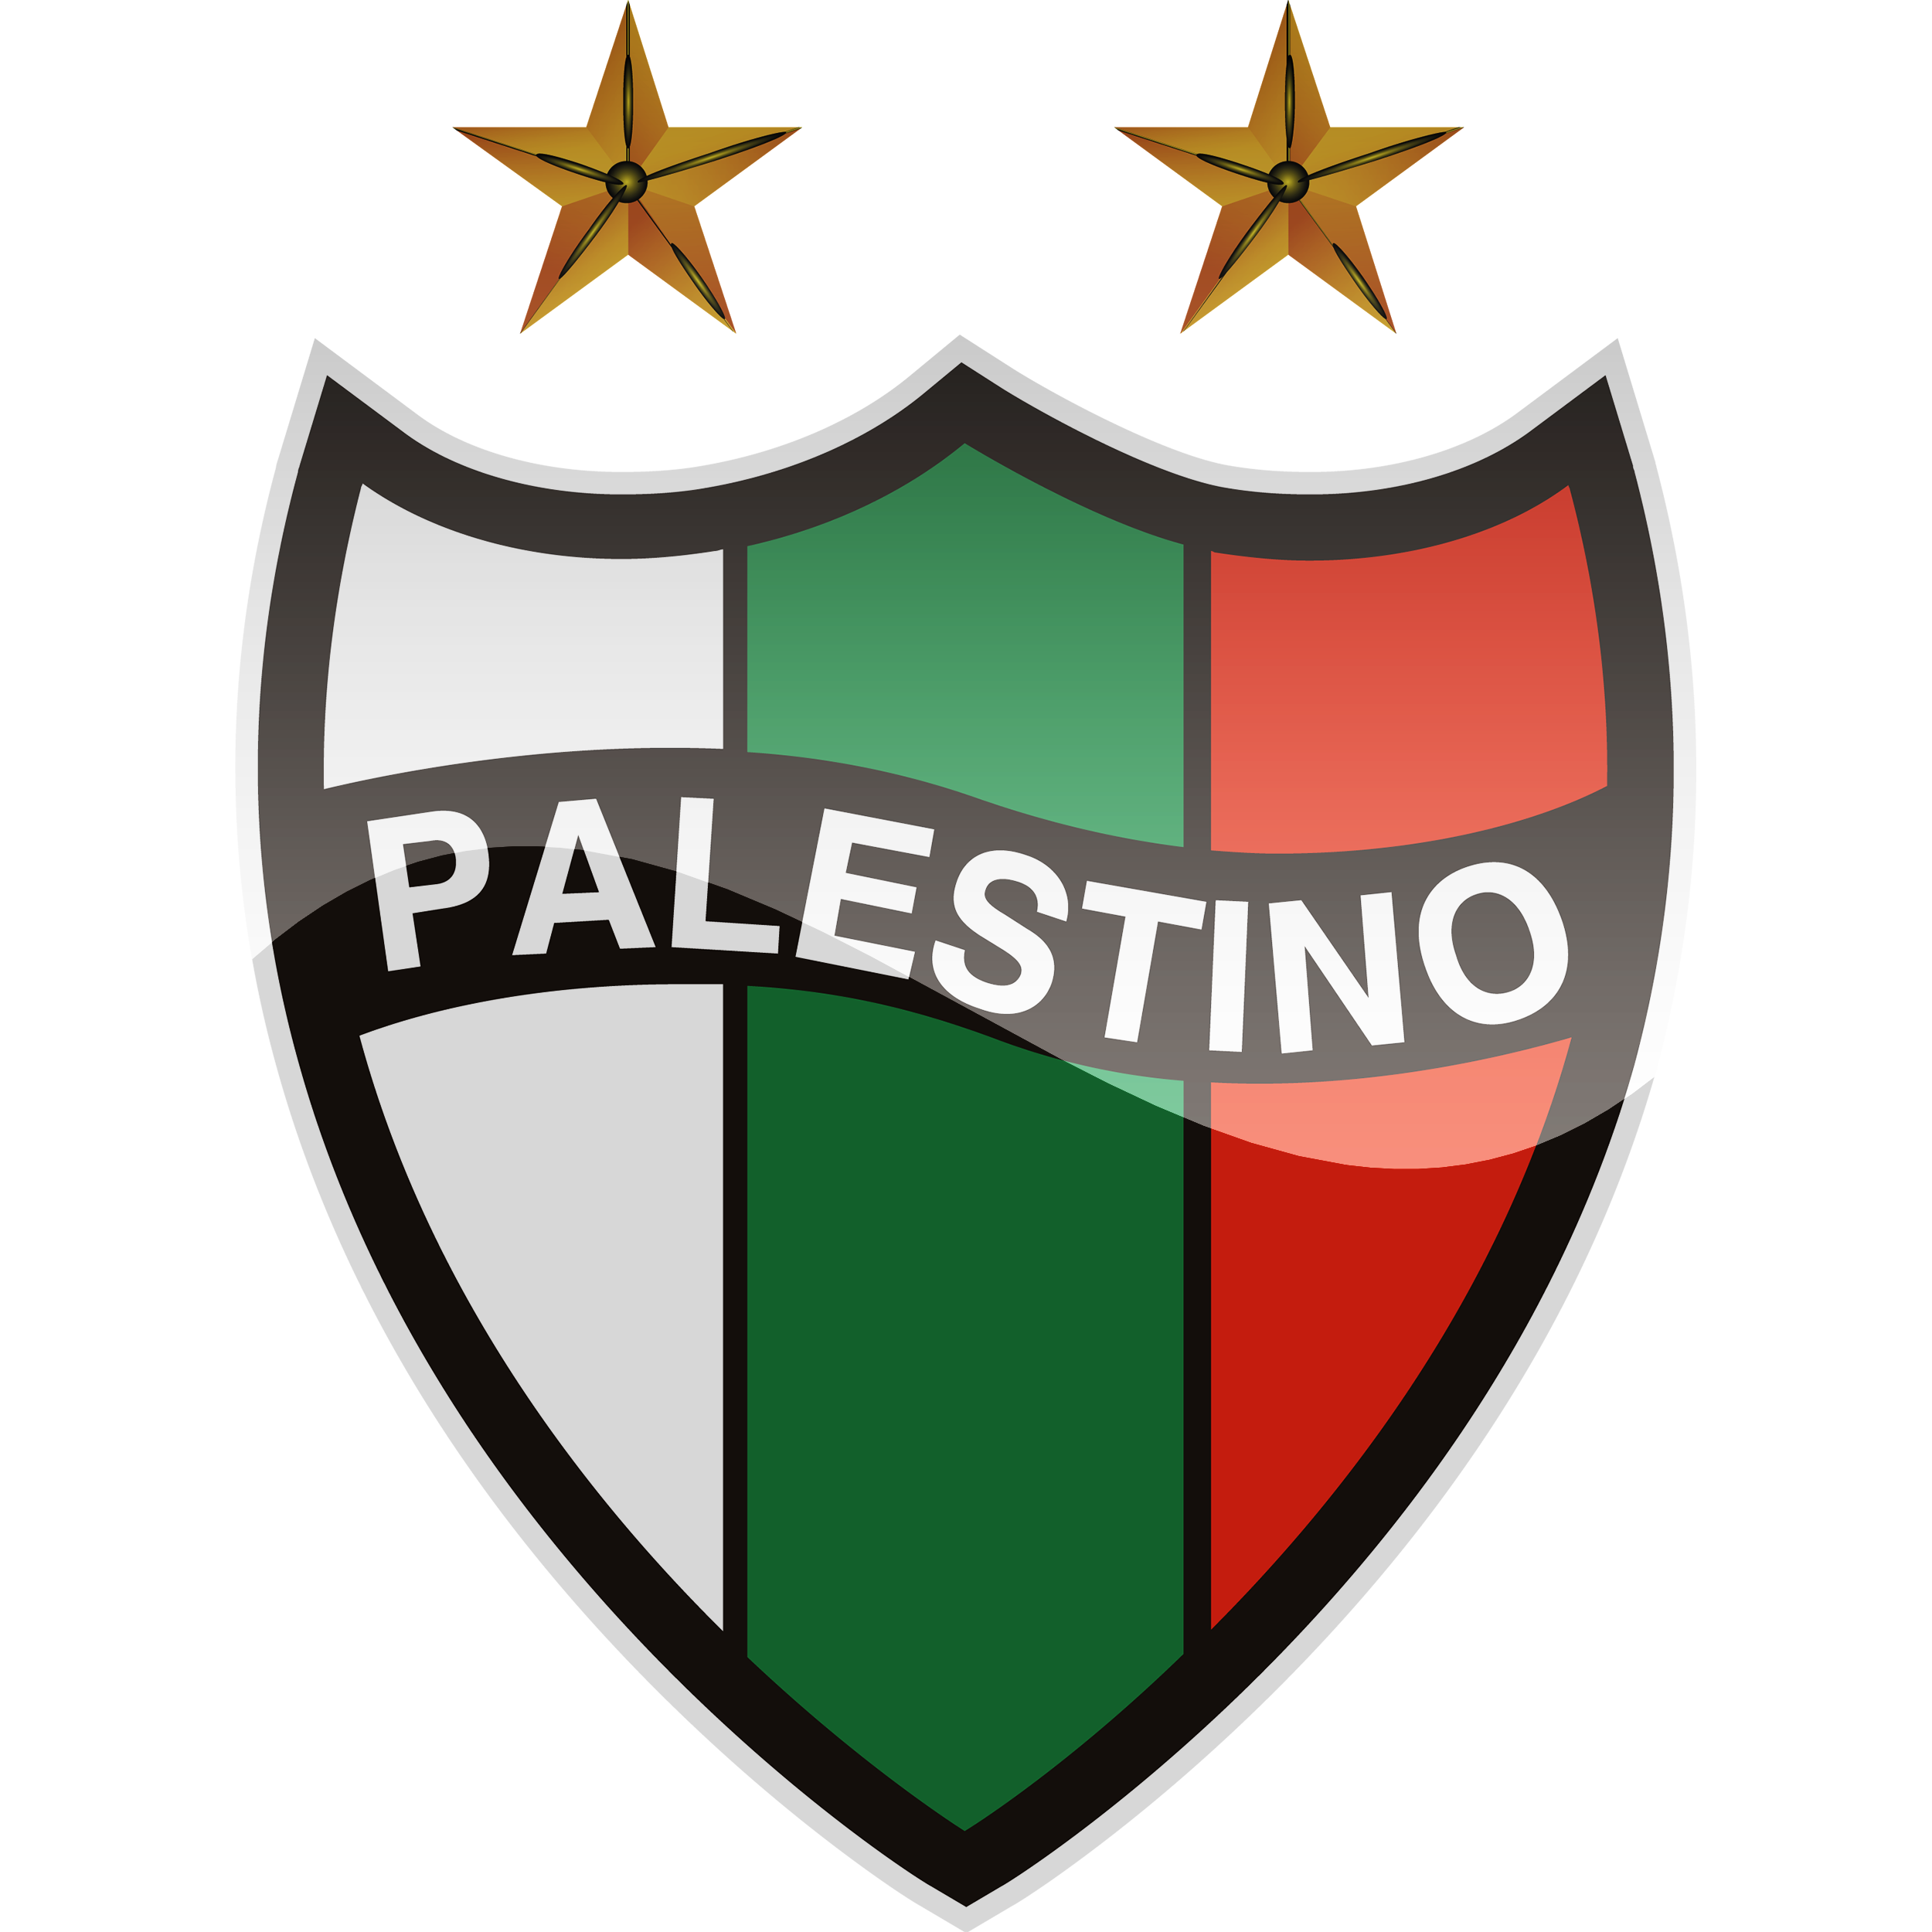 Deportes Iquique vs Palestino Prediction: Both teams will misfire defensively